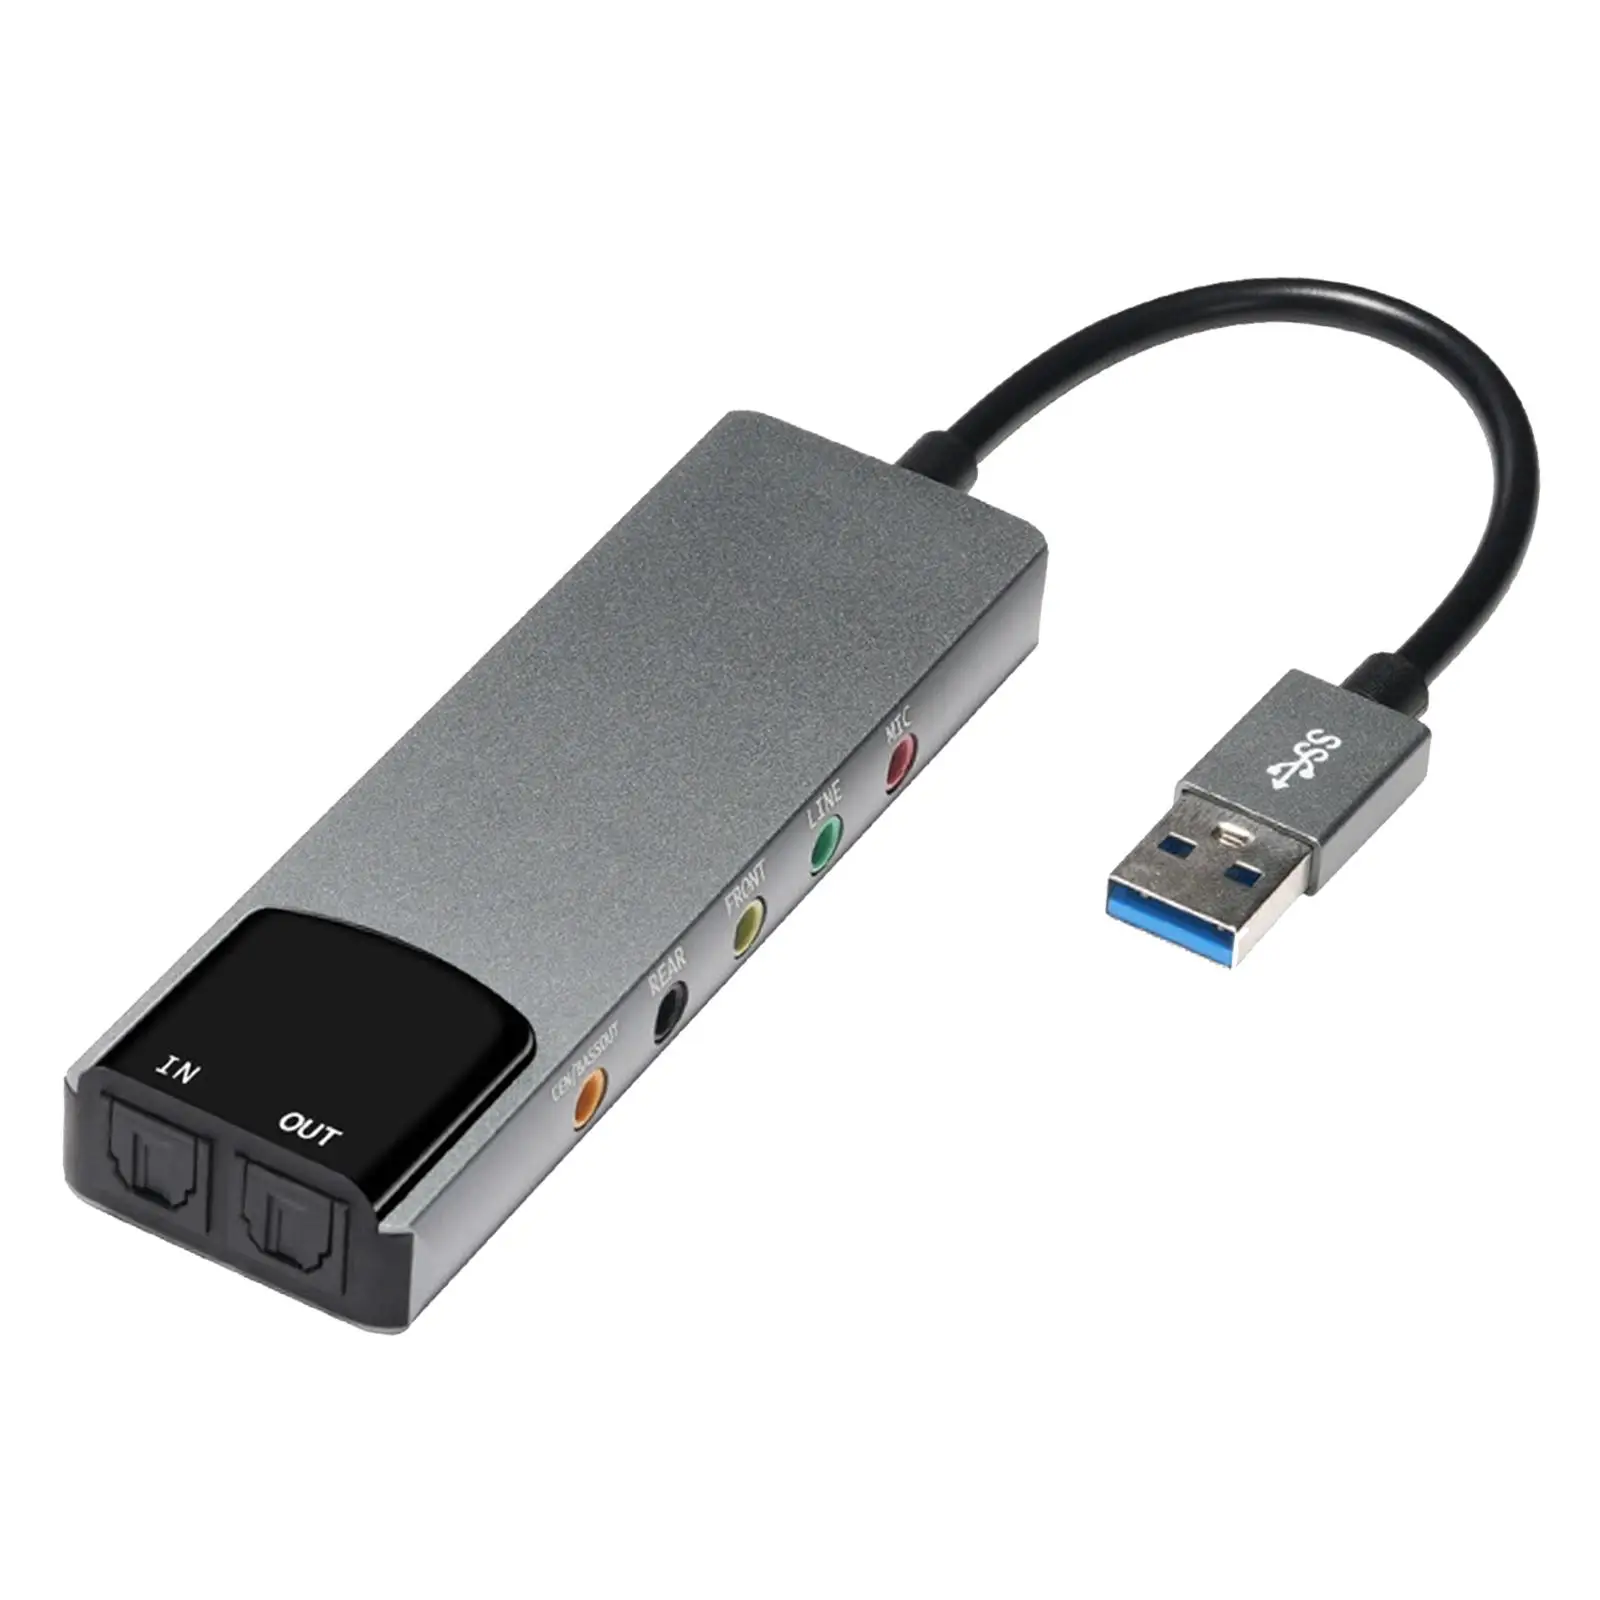 USB Sound Card Aluminum Alloy Premium Durable External Sound Card External Audio Adapter USB Audio Adapter for Laptops Desktops